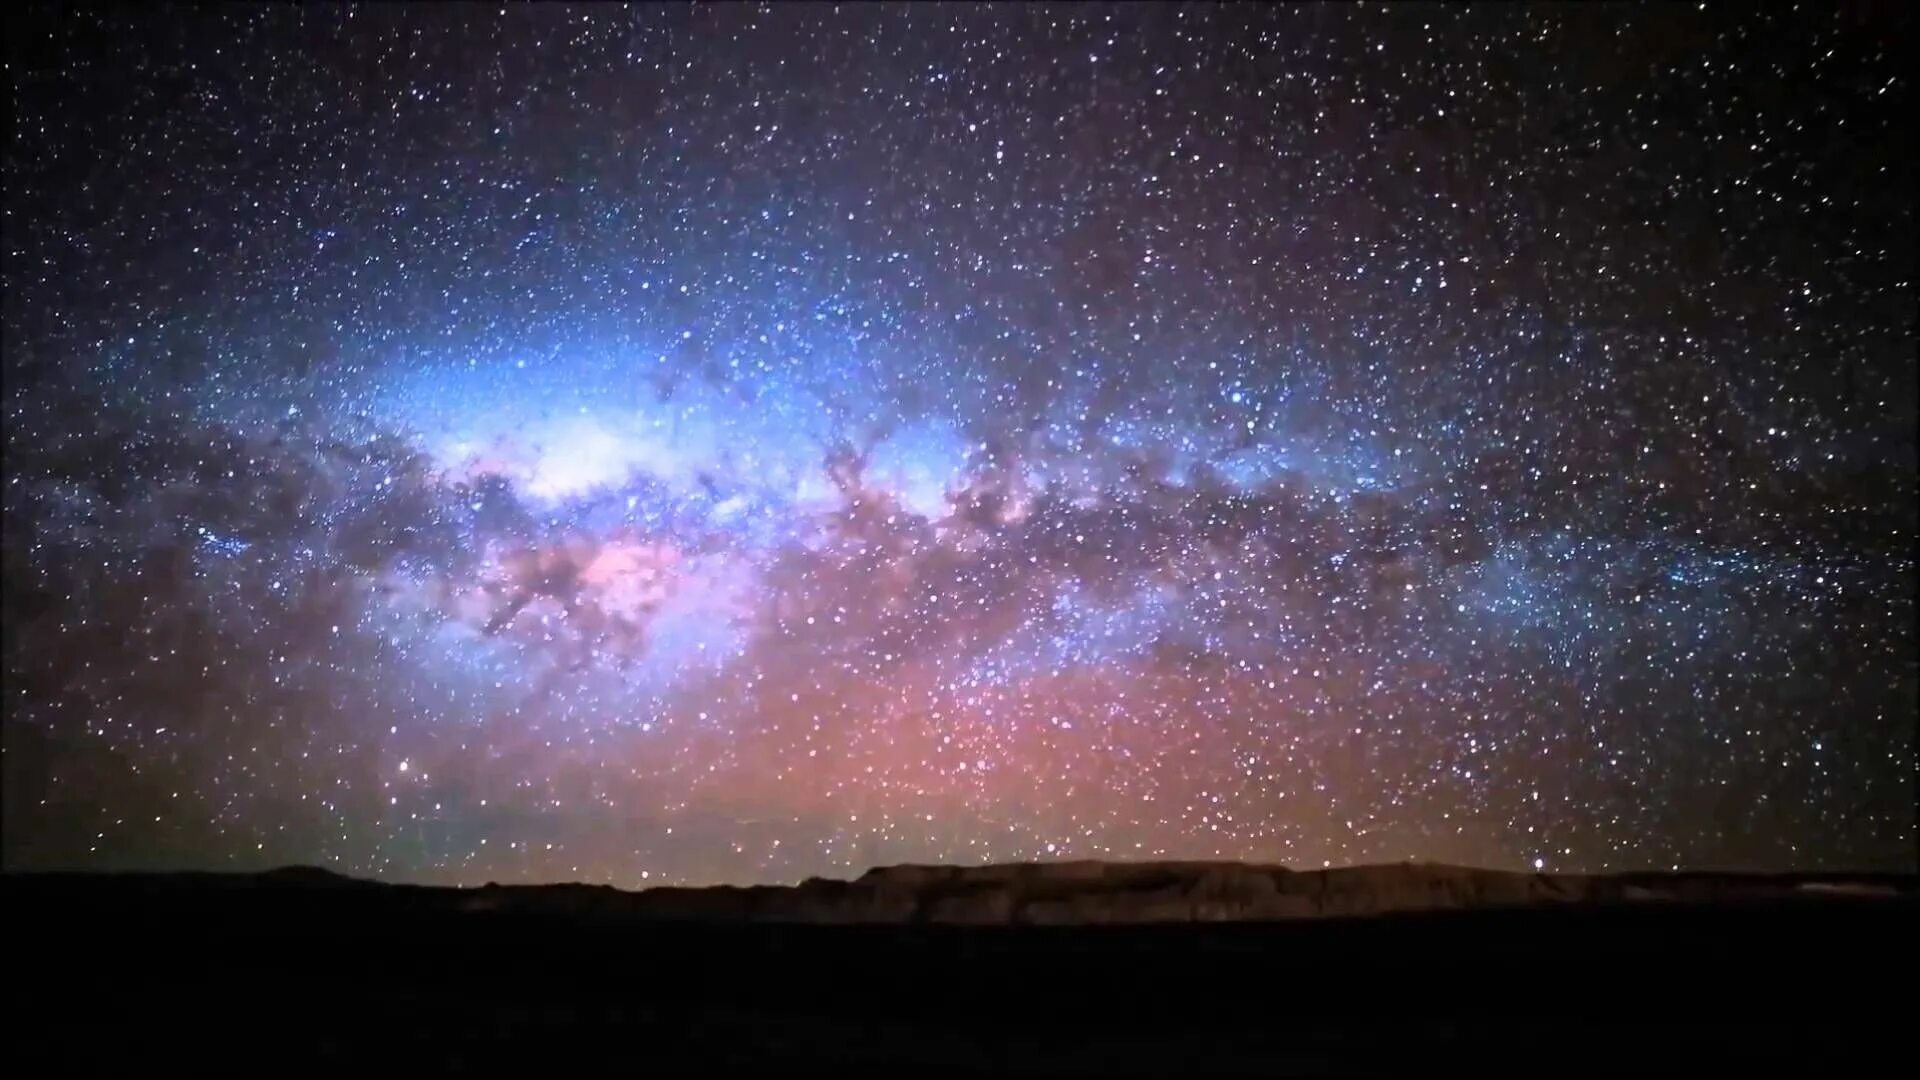 Звездное небо космос Млечный путь. Млечный путь Ореон звезд. Проектор звездного неба "космос-Млечный путь". Чистое звездное небо